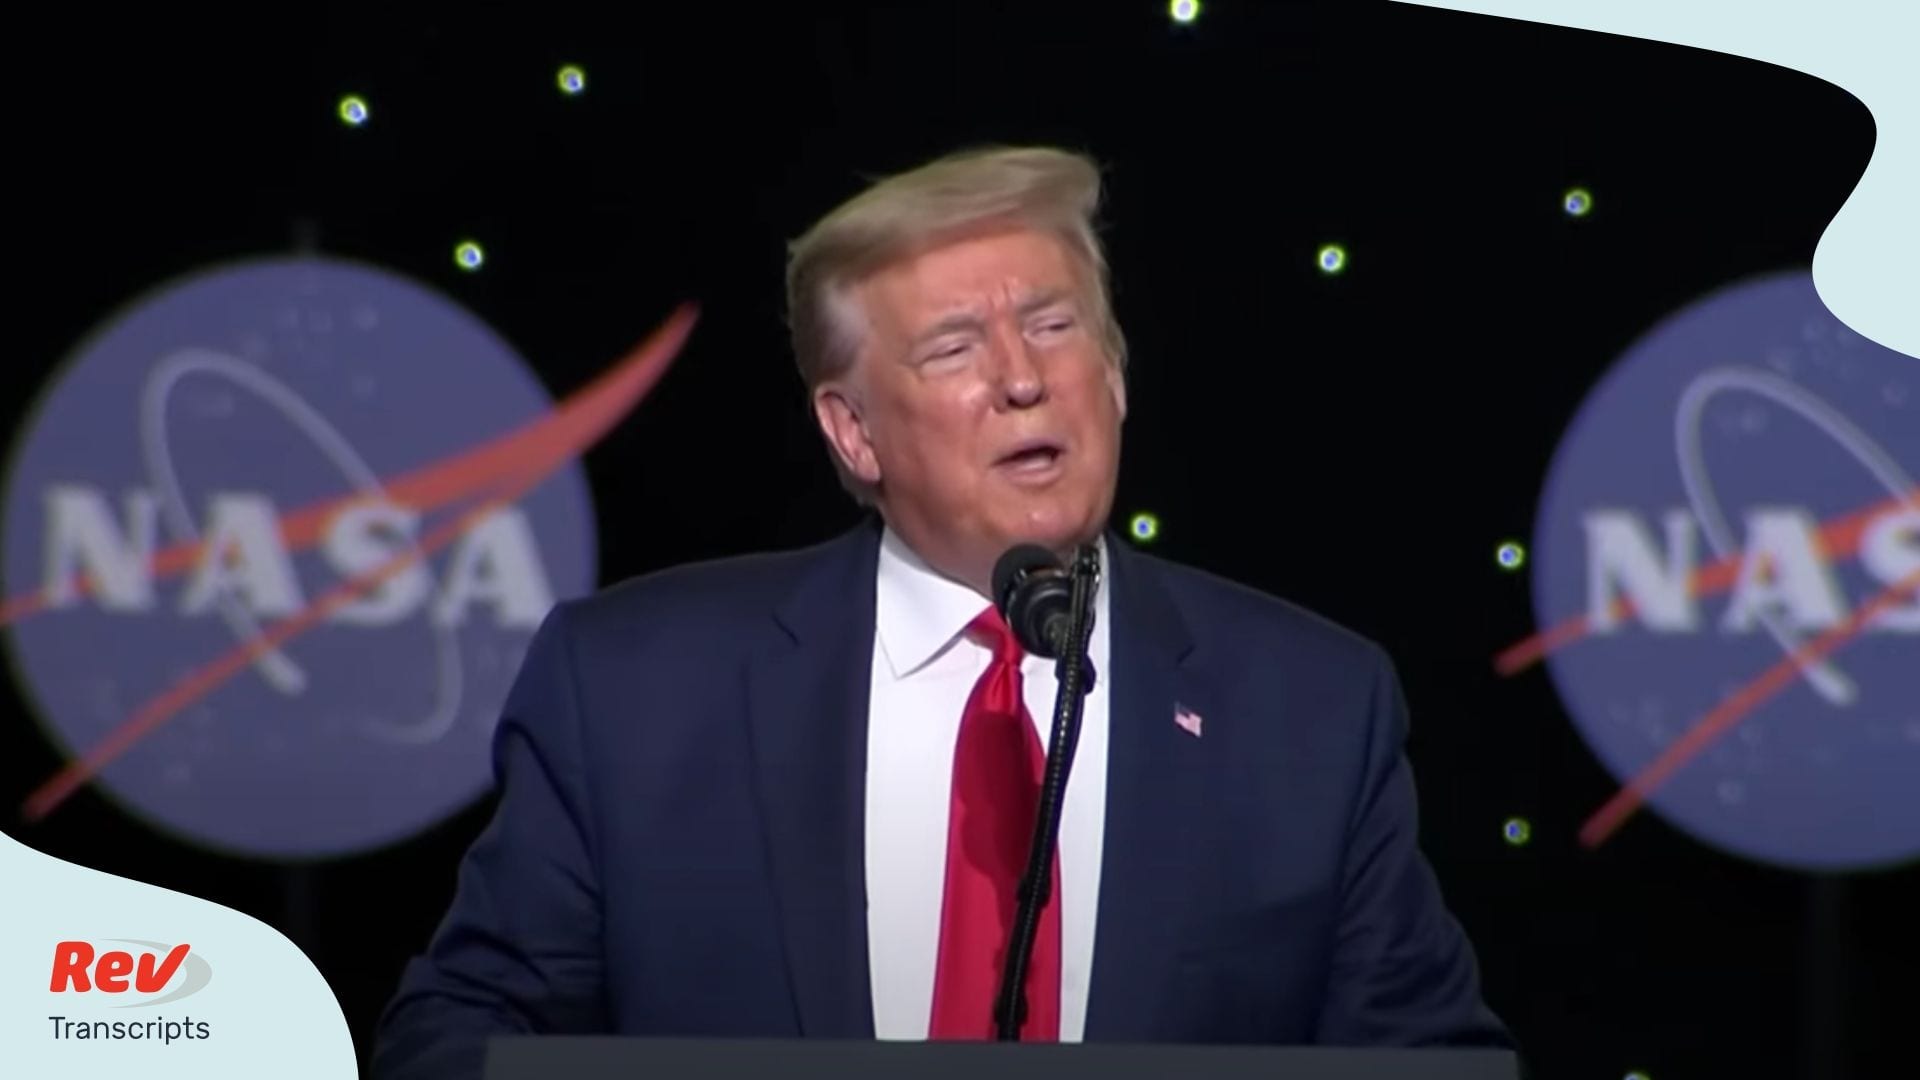 Donald Trump Speech Transcript at Kennedy Center After SpaceX NASA Launch